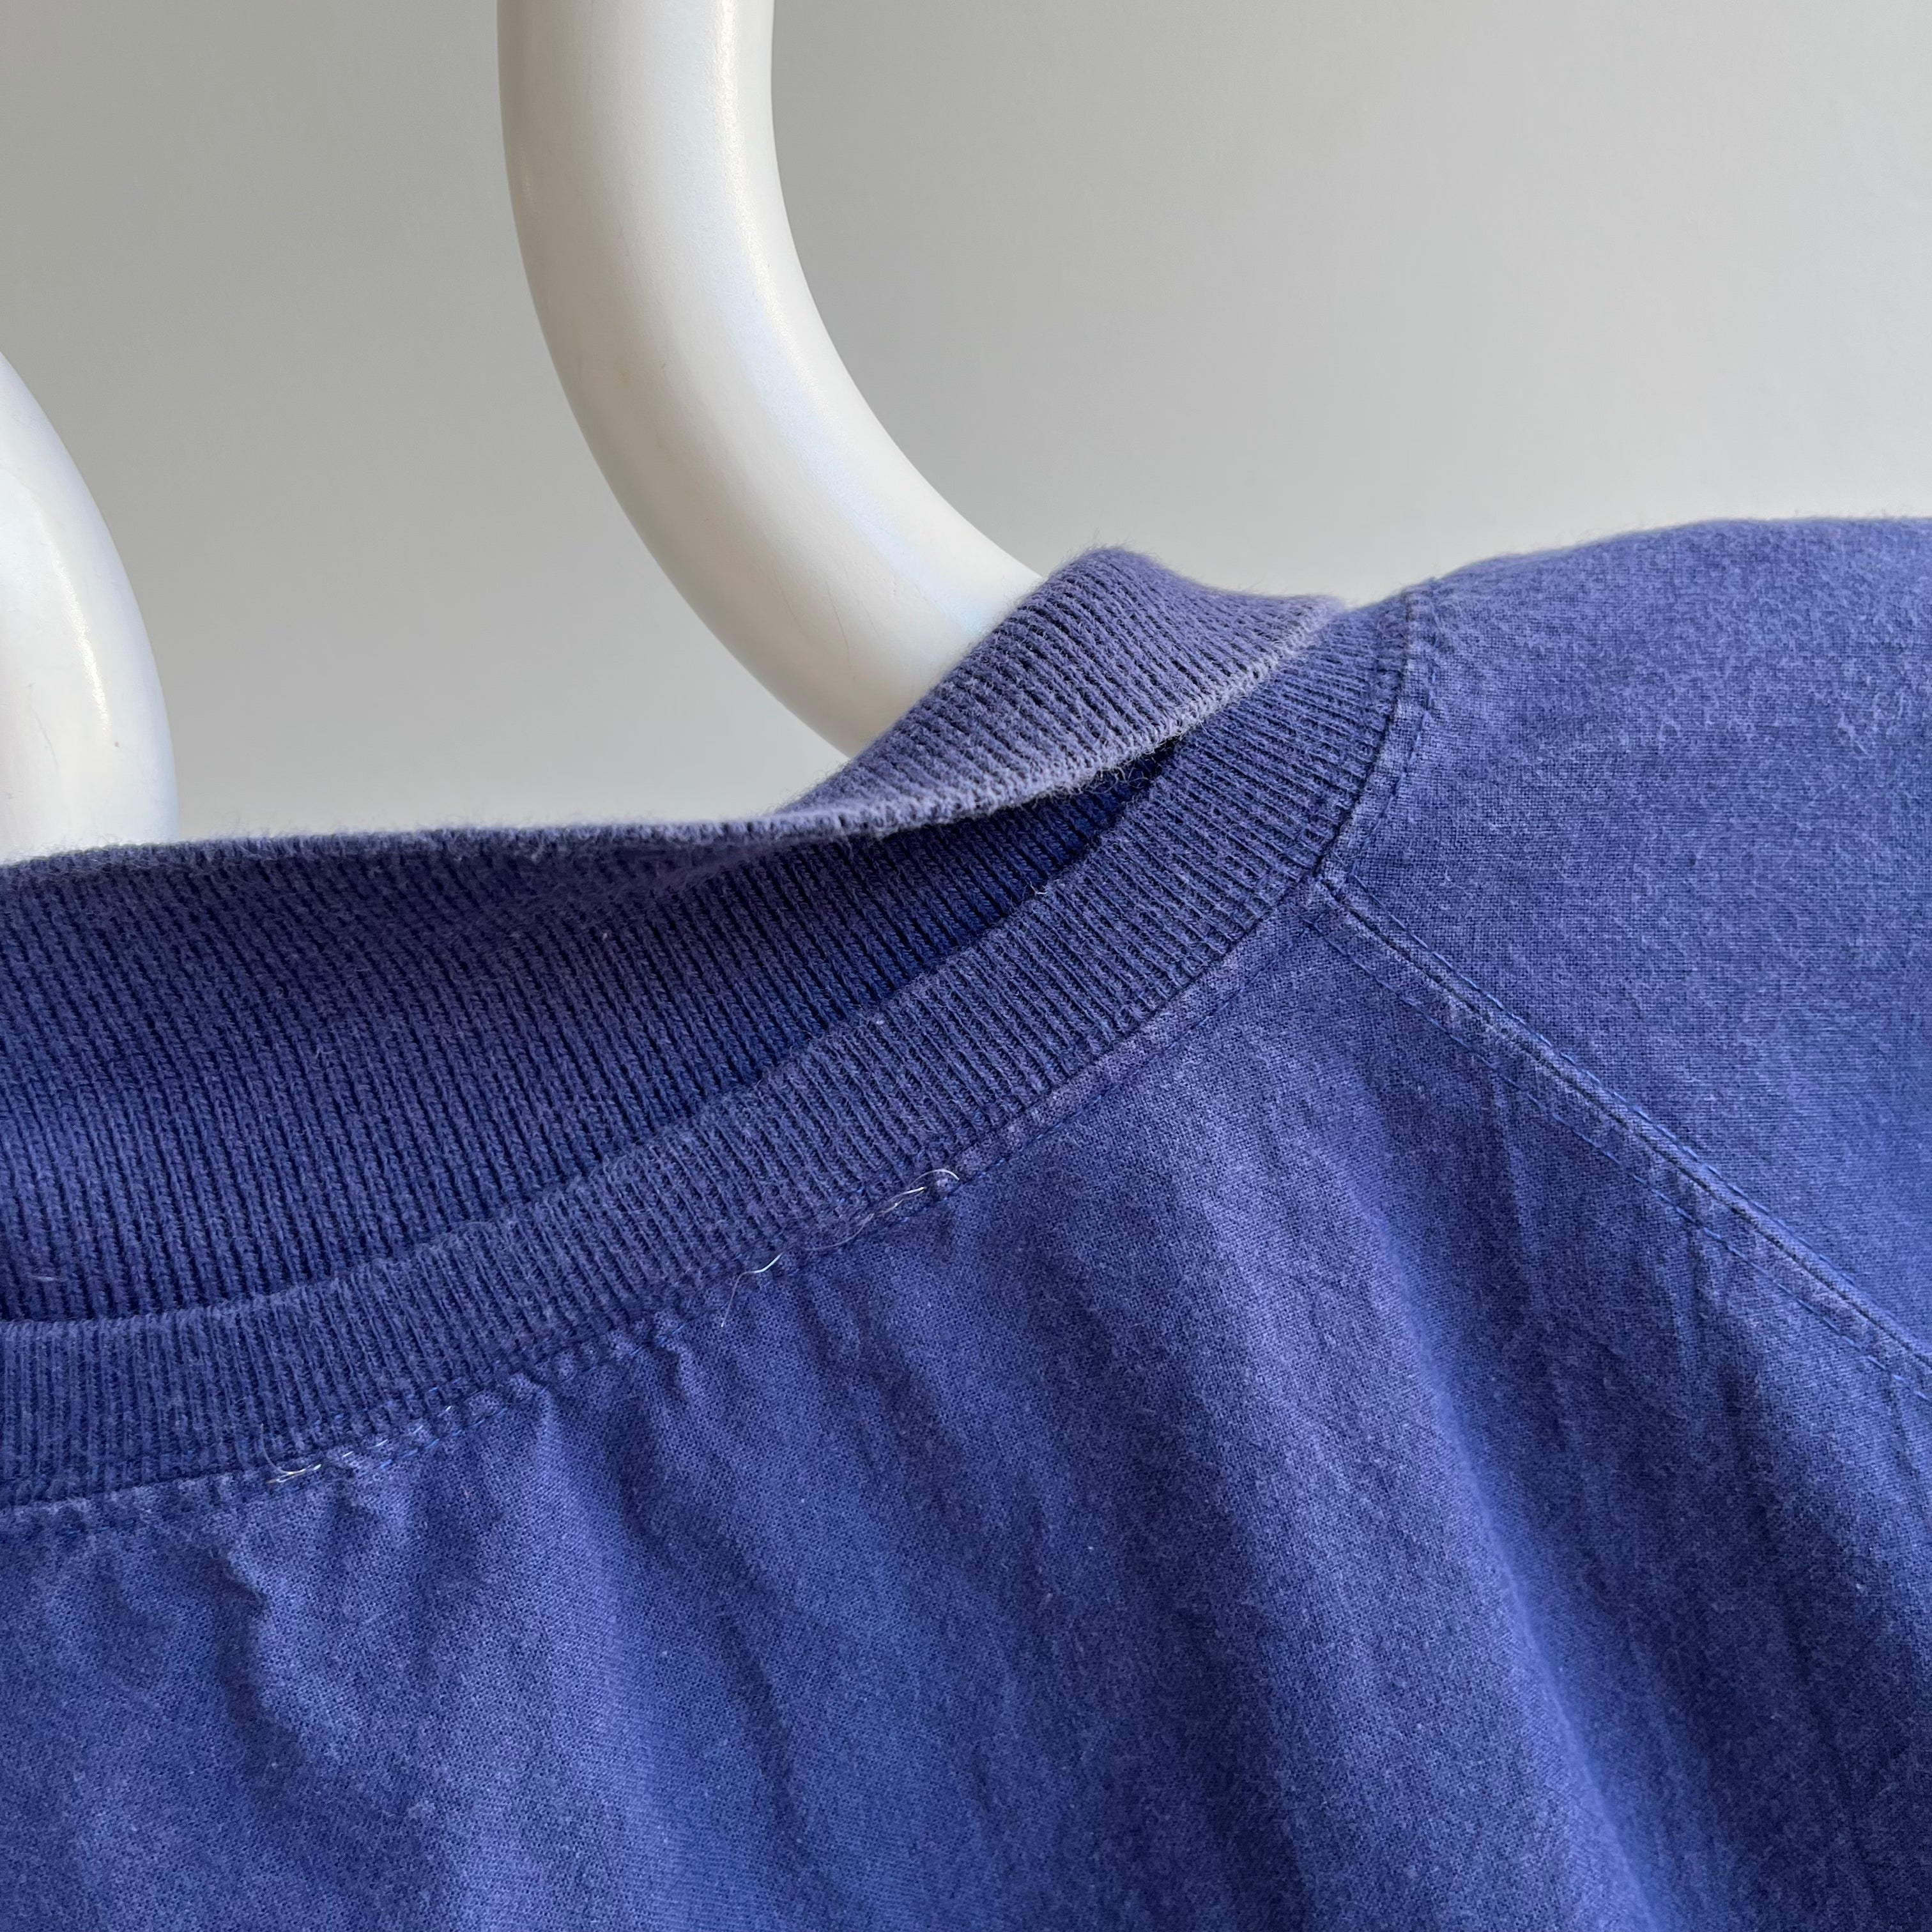 1980s Lightweight Cotton Collared 3/4 sleeve Blouse/Sweatshirt Cut/Shirt